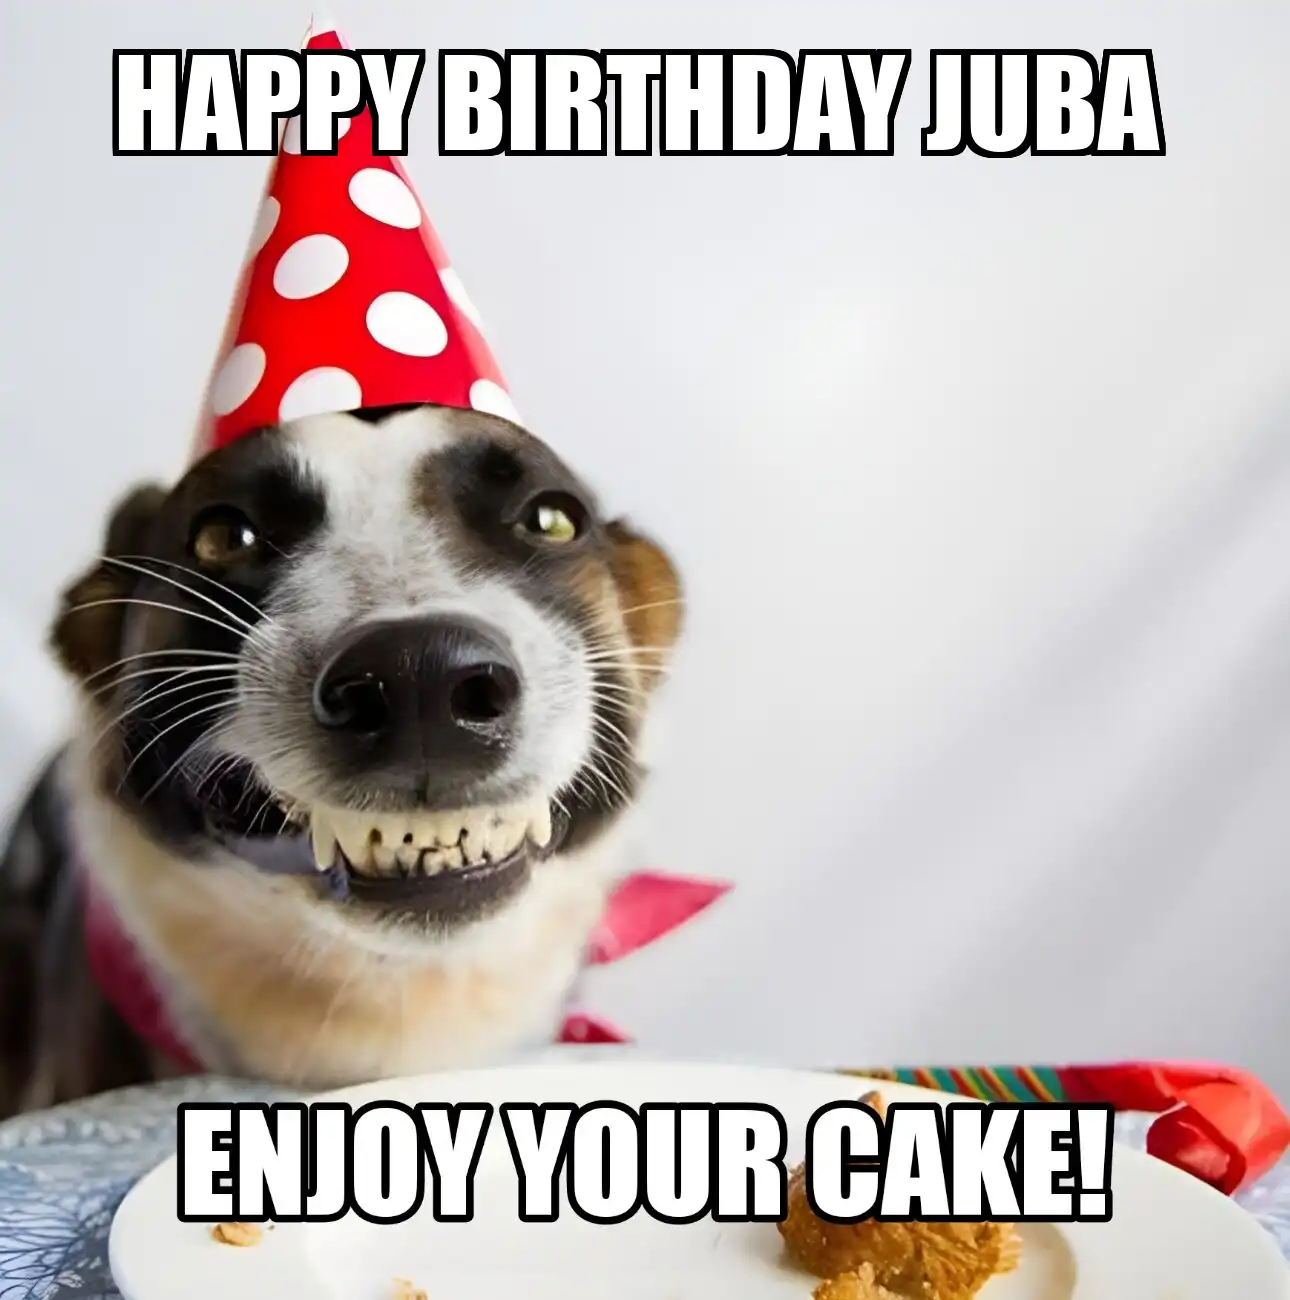 Happy Birthday Juba Enjoy Your Cake Dog Meme